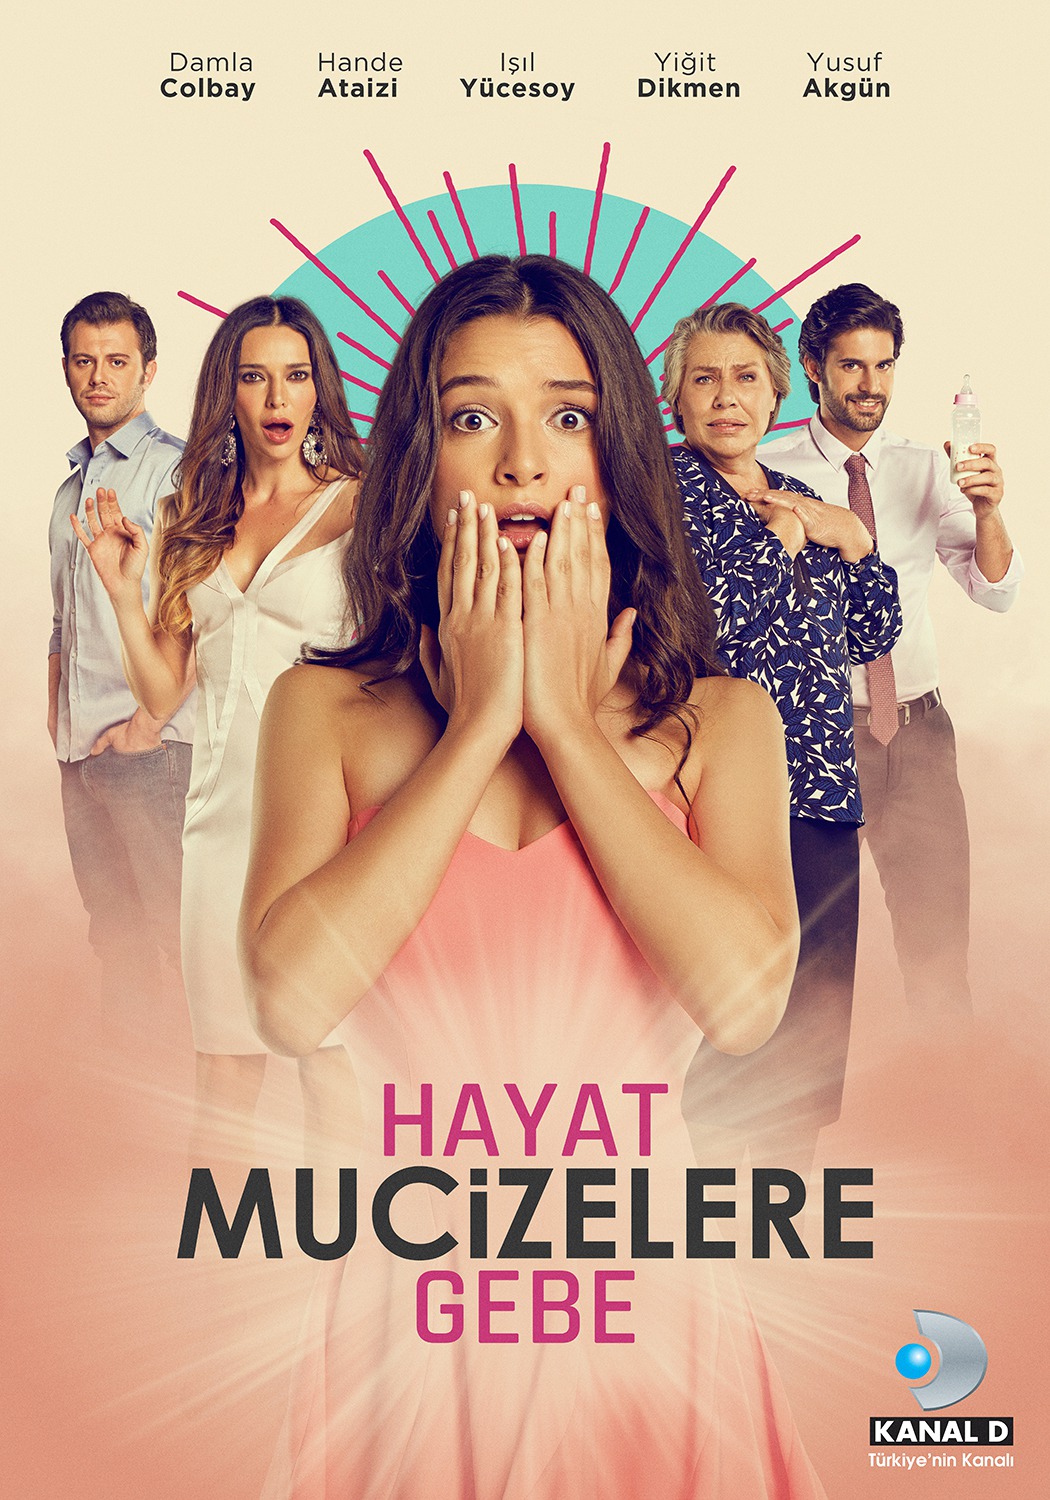 Extra Large TV Poster Image for Hayat Mucizelere Gebe 